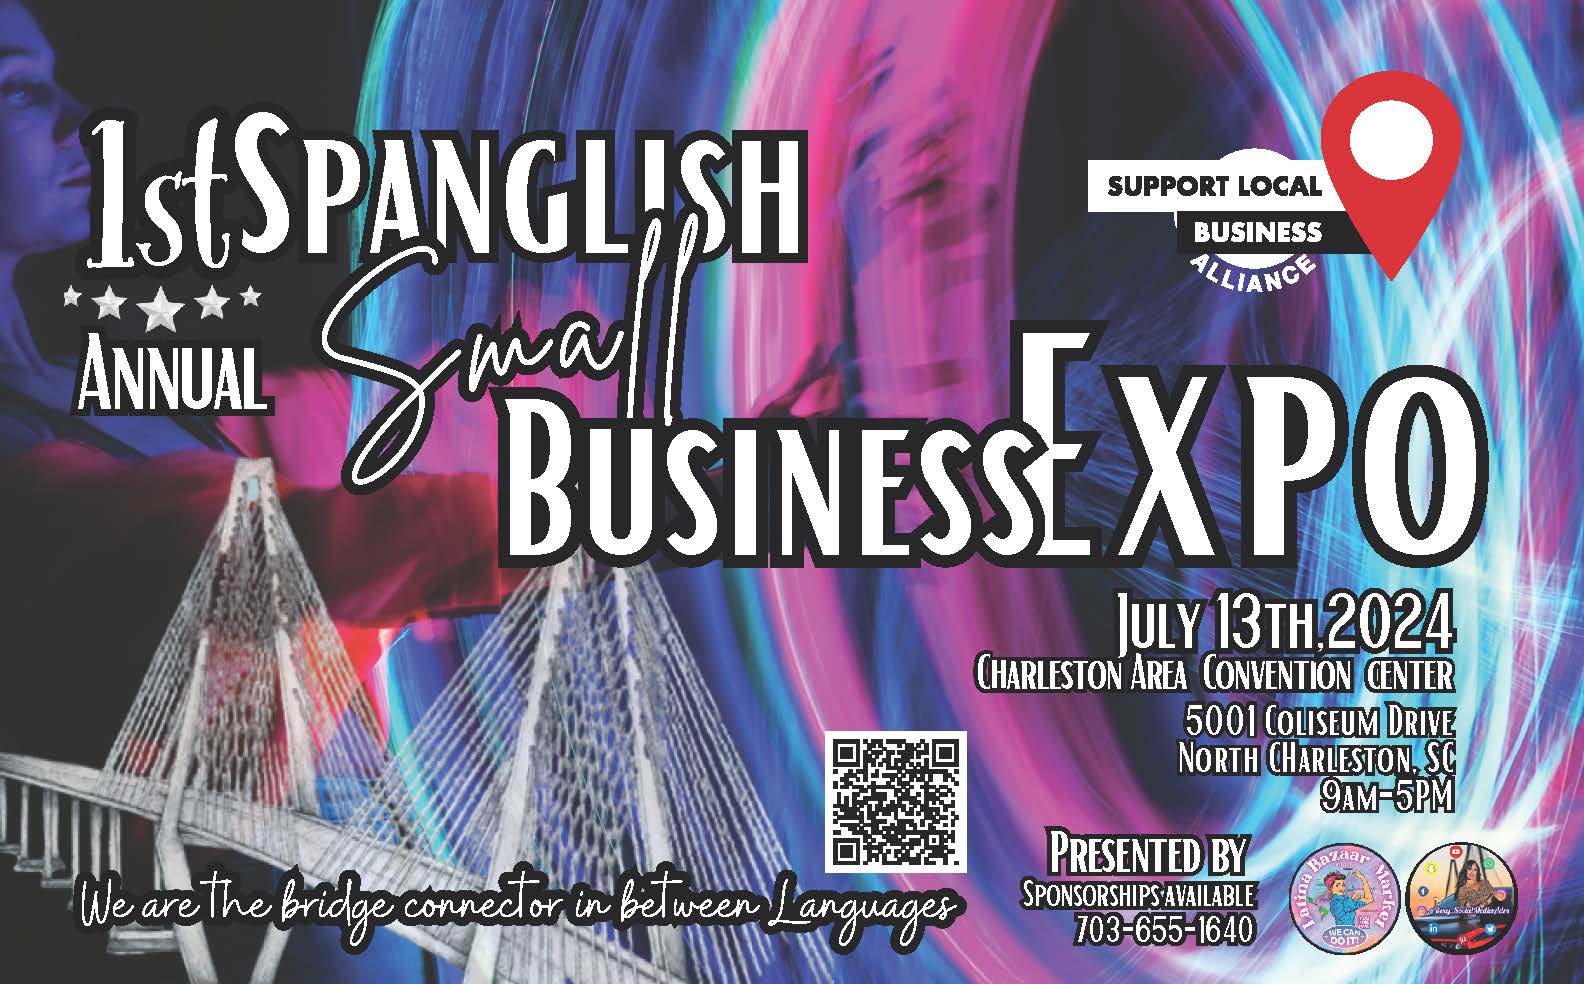 More Info for Spanglish Expo 